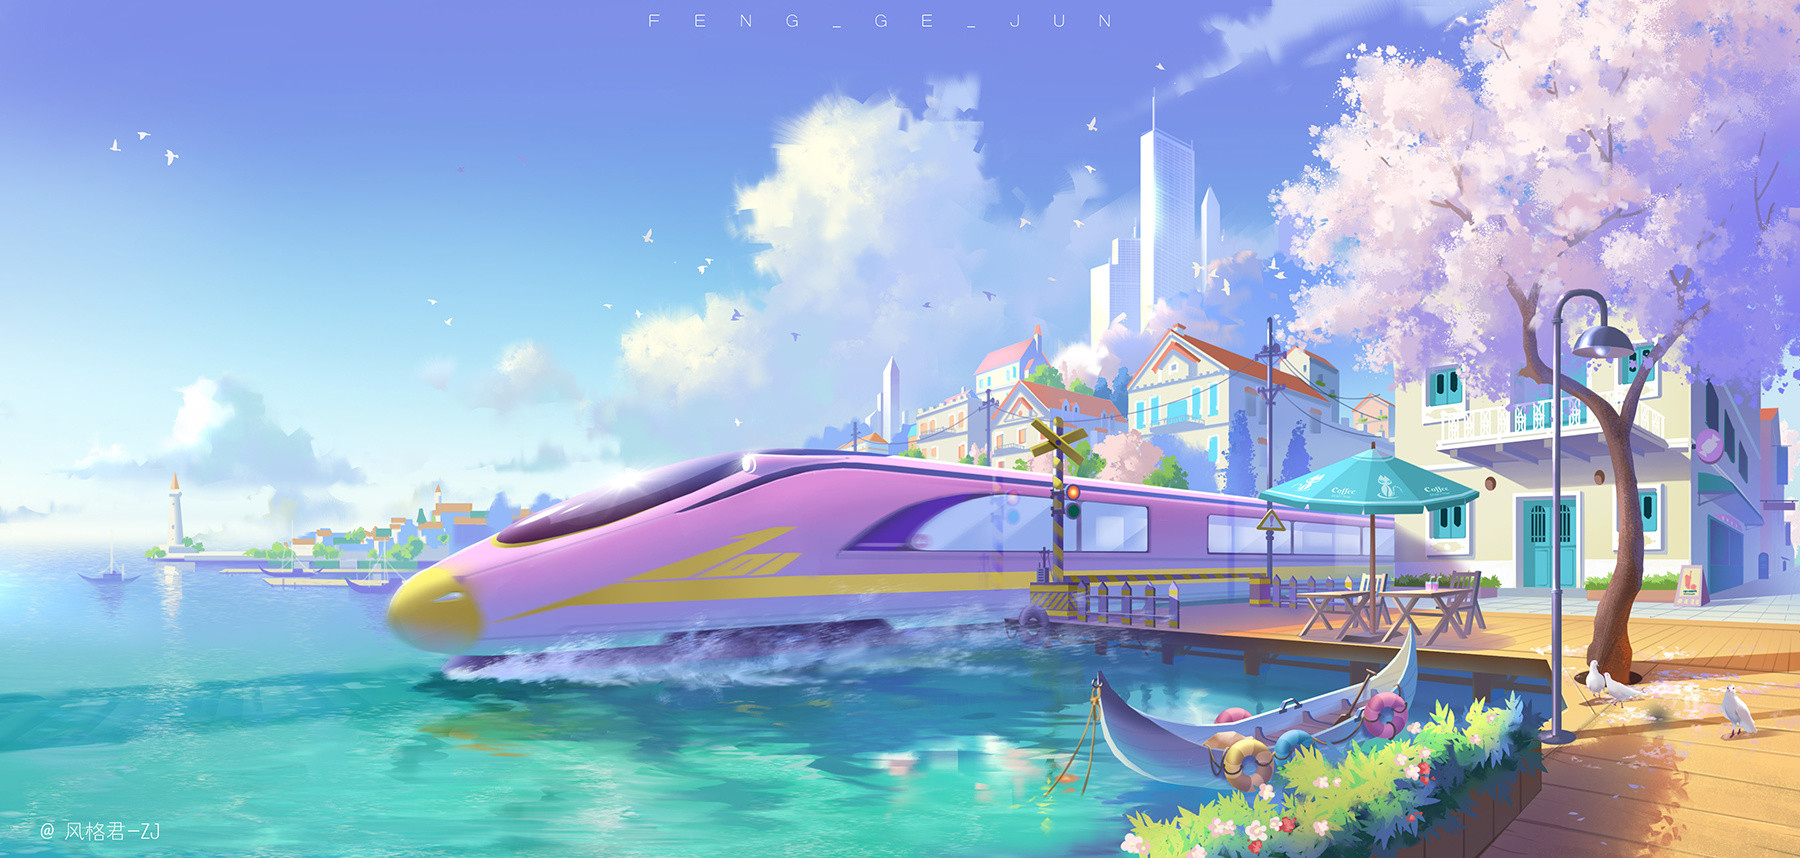 Jun Zhang Fantasy Art Digital Art Asian Architecture Landscape Train Canoe Water Lighthouse Pink Fan 1800x858